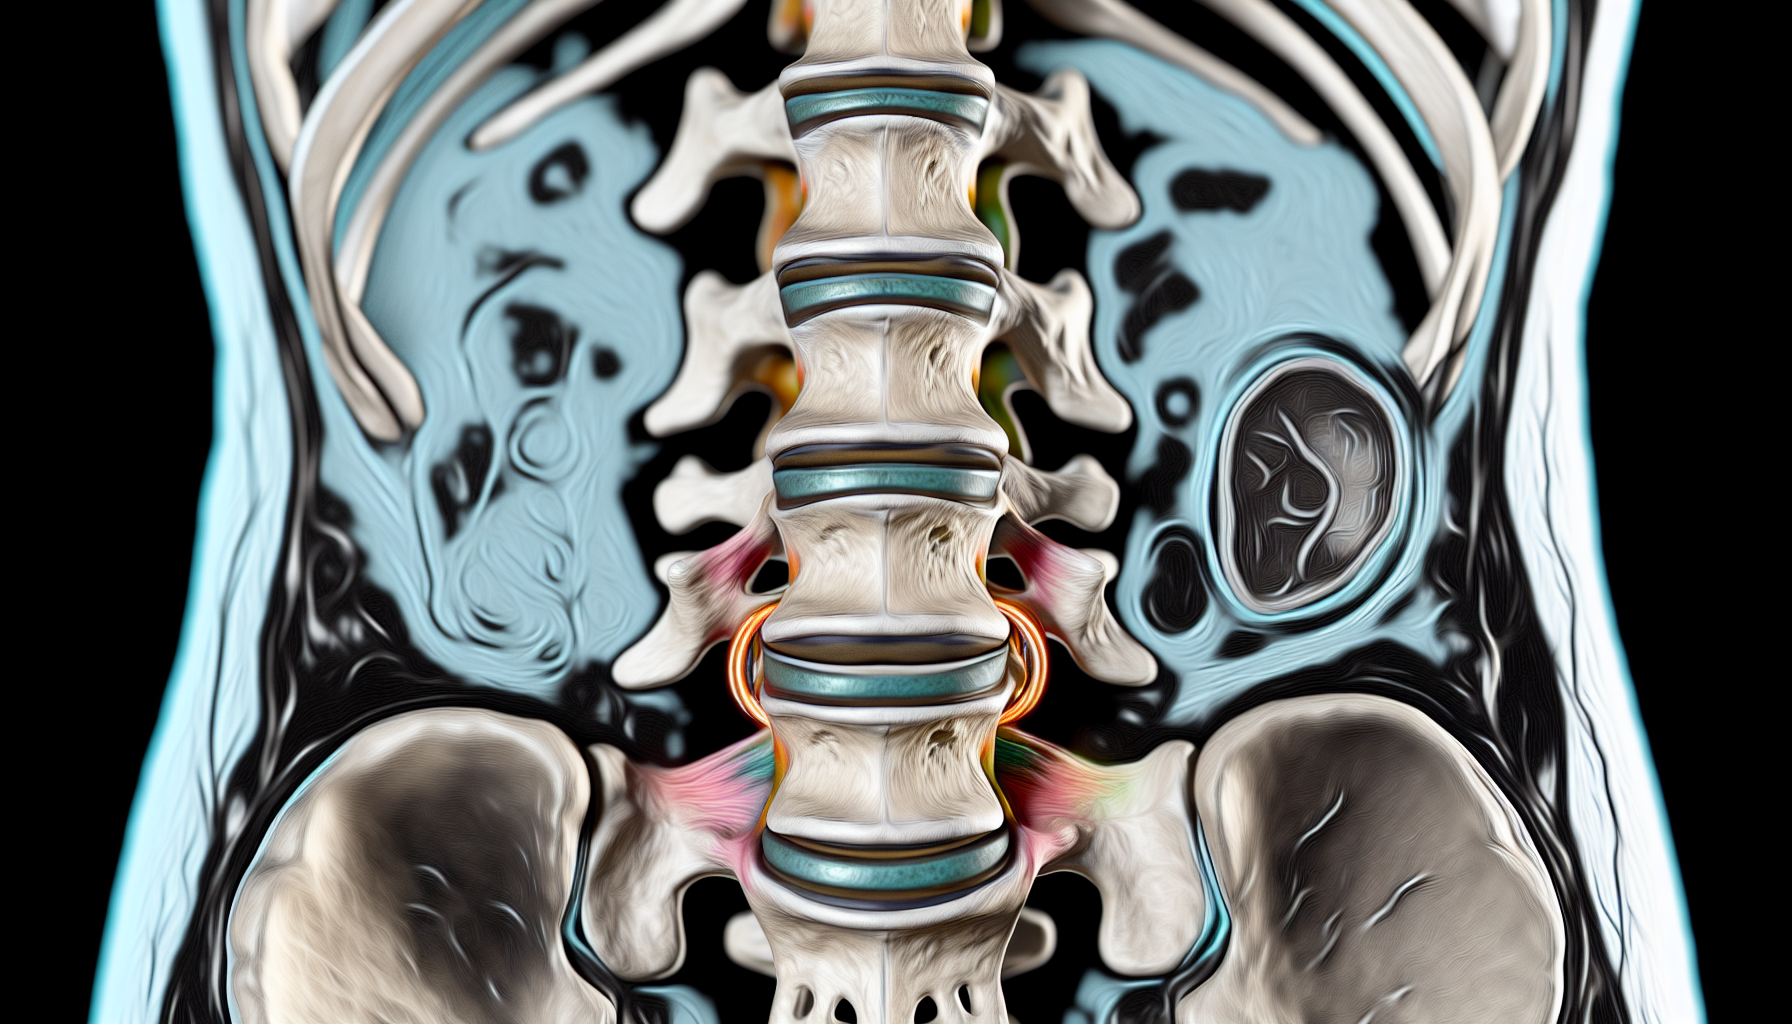 MRI scan showing herniated disc